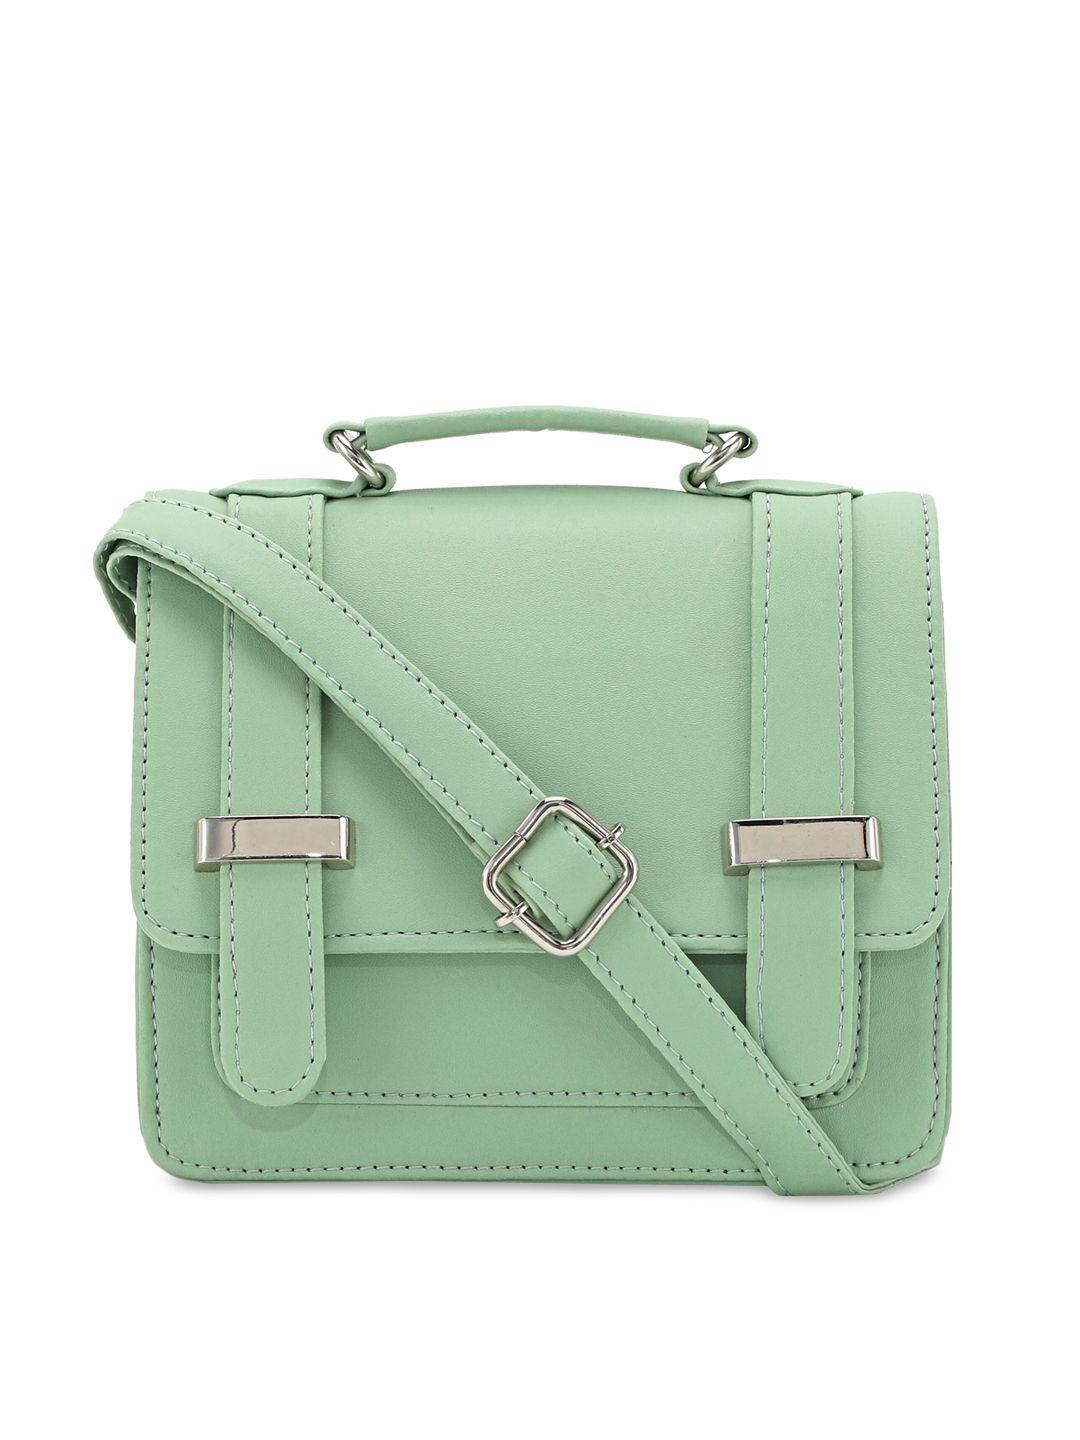 toteteca green pu structured satchel